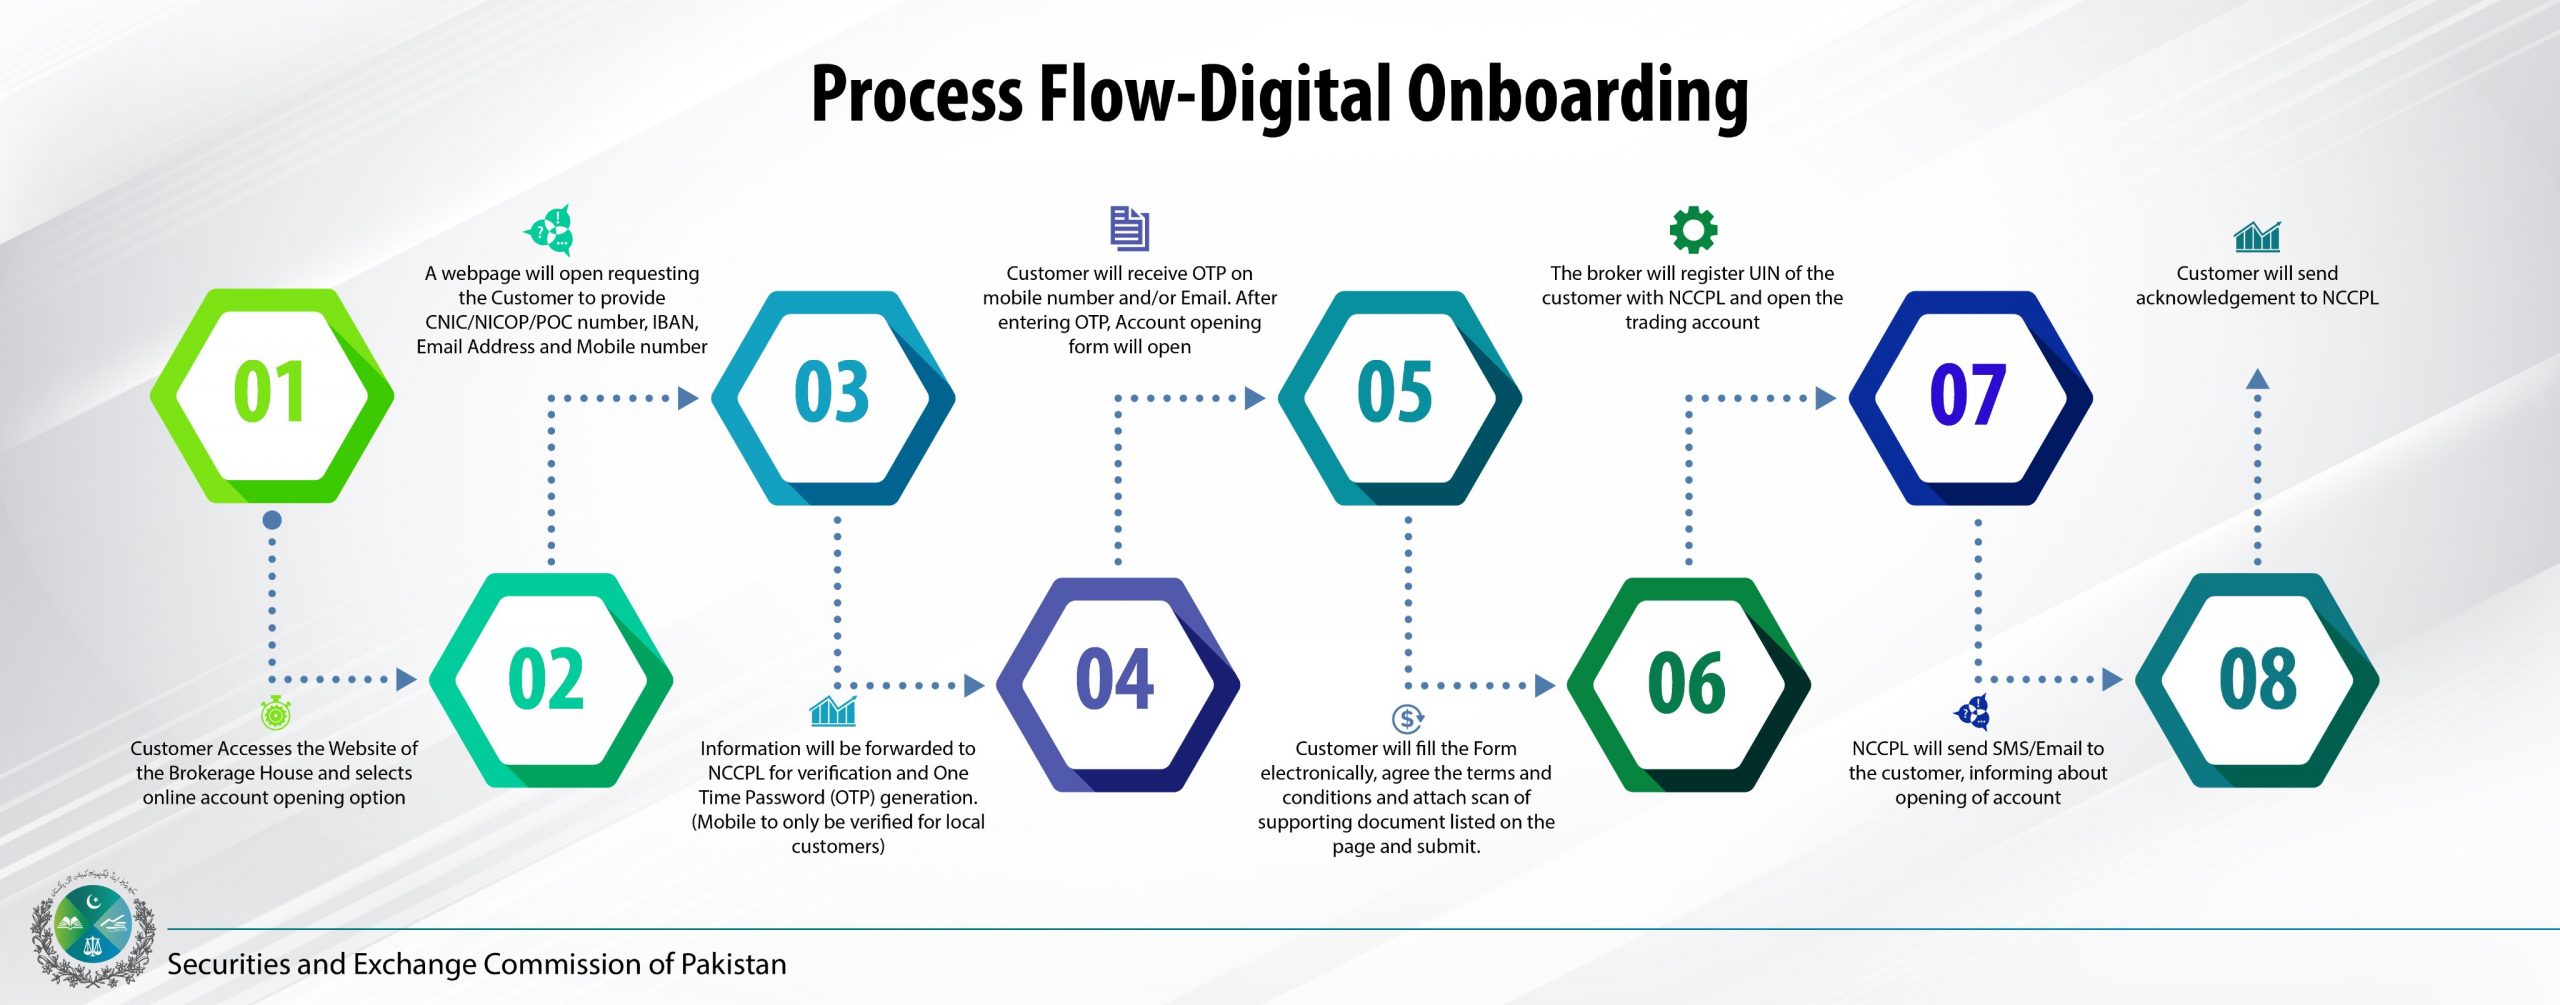 prcess flow digital onboarding